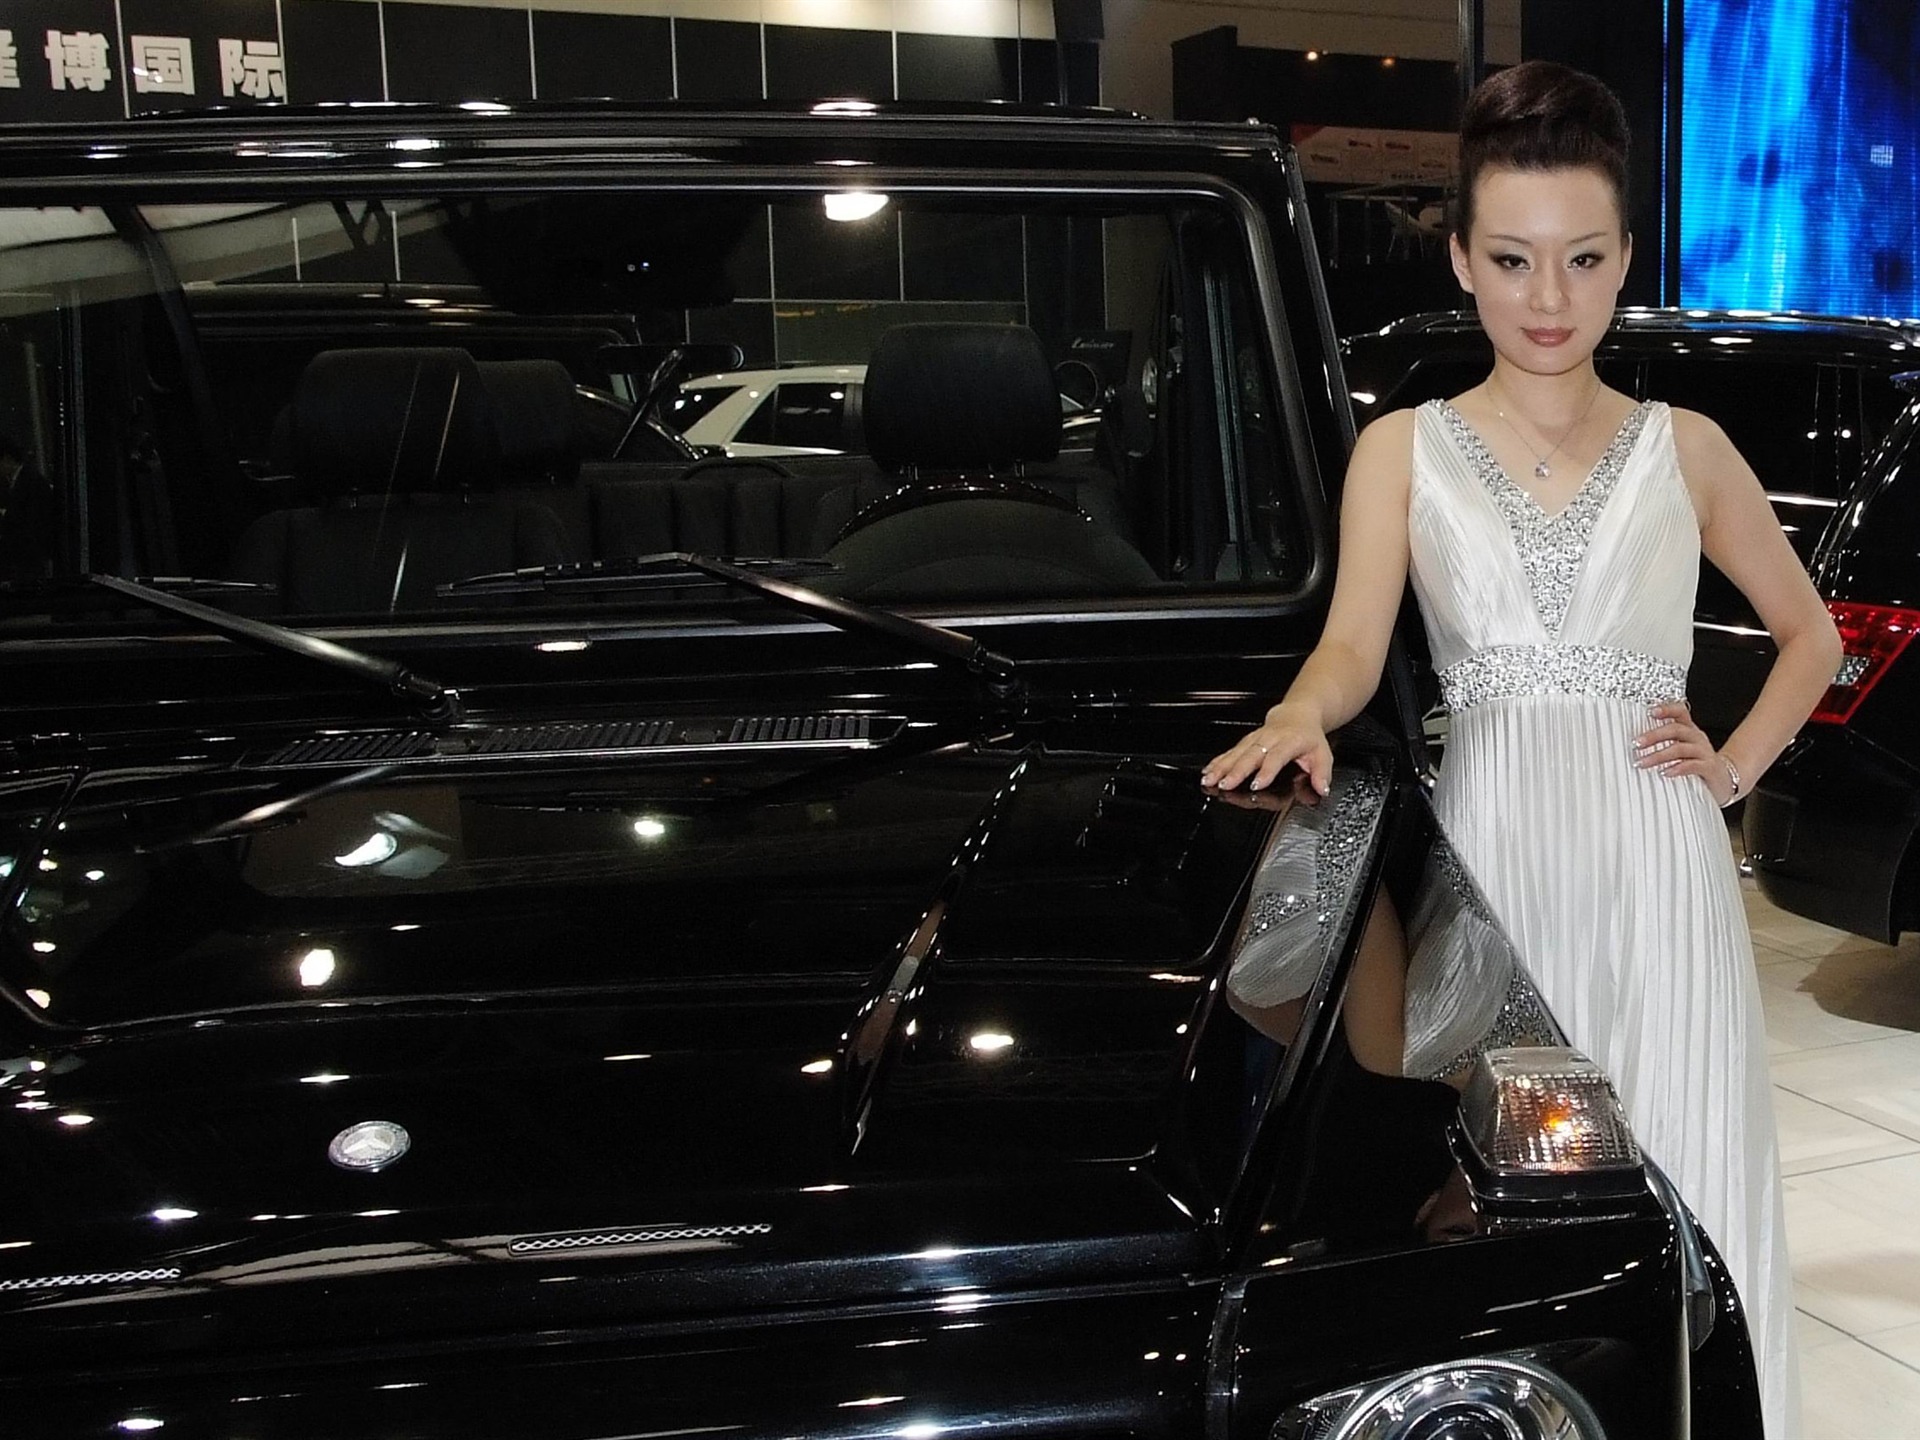 2010 Salón Internacional del Automóvil de Beijing Heung Che belleza (obras barras de refuerzo) #7 - 1920x1440